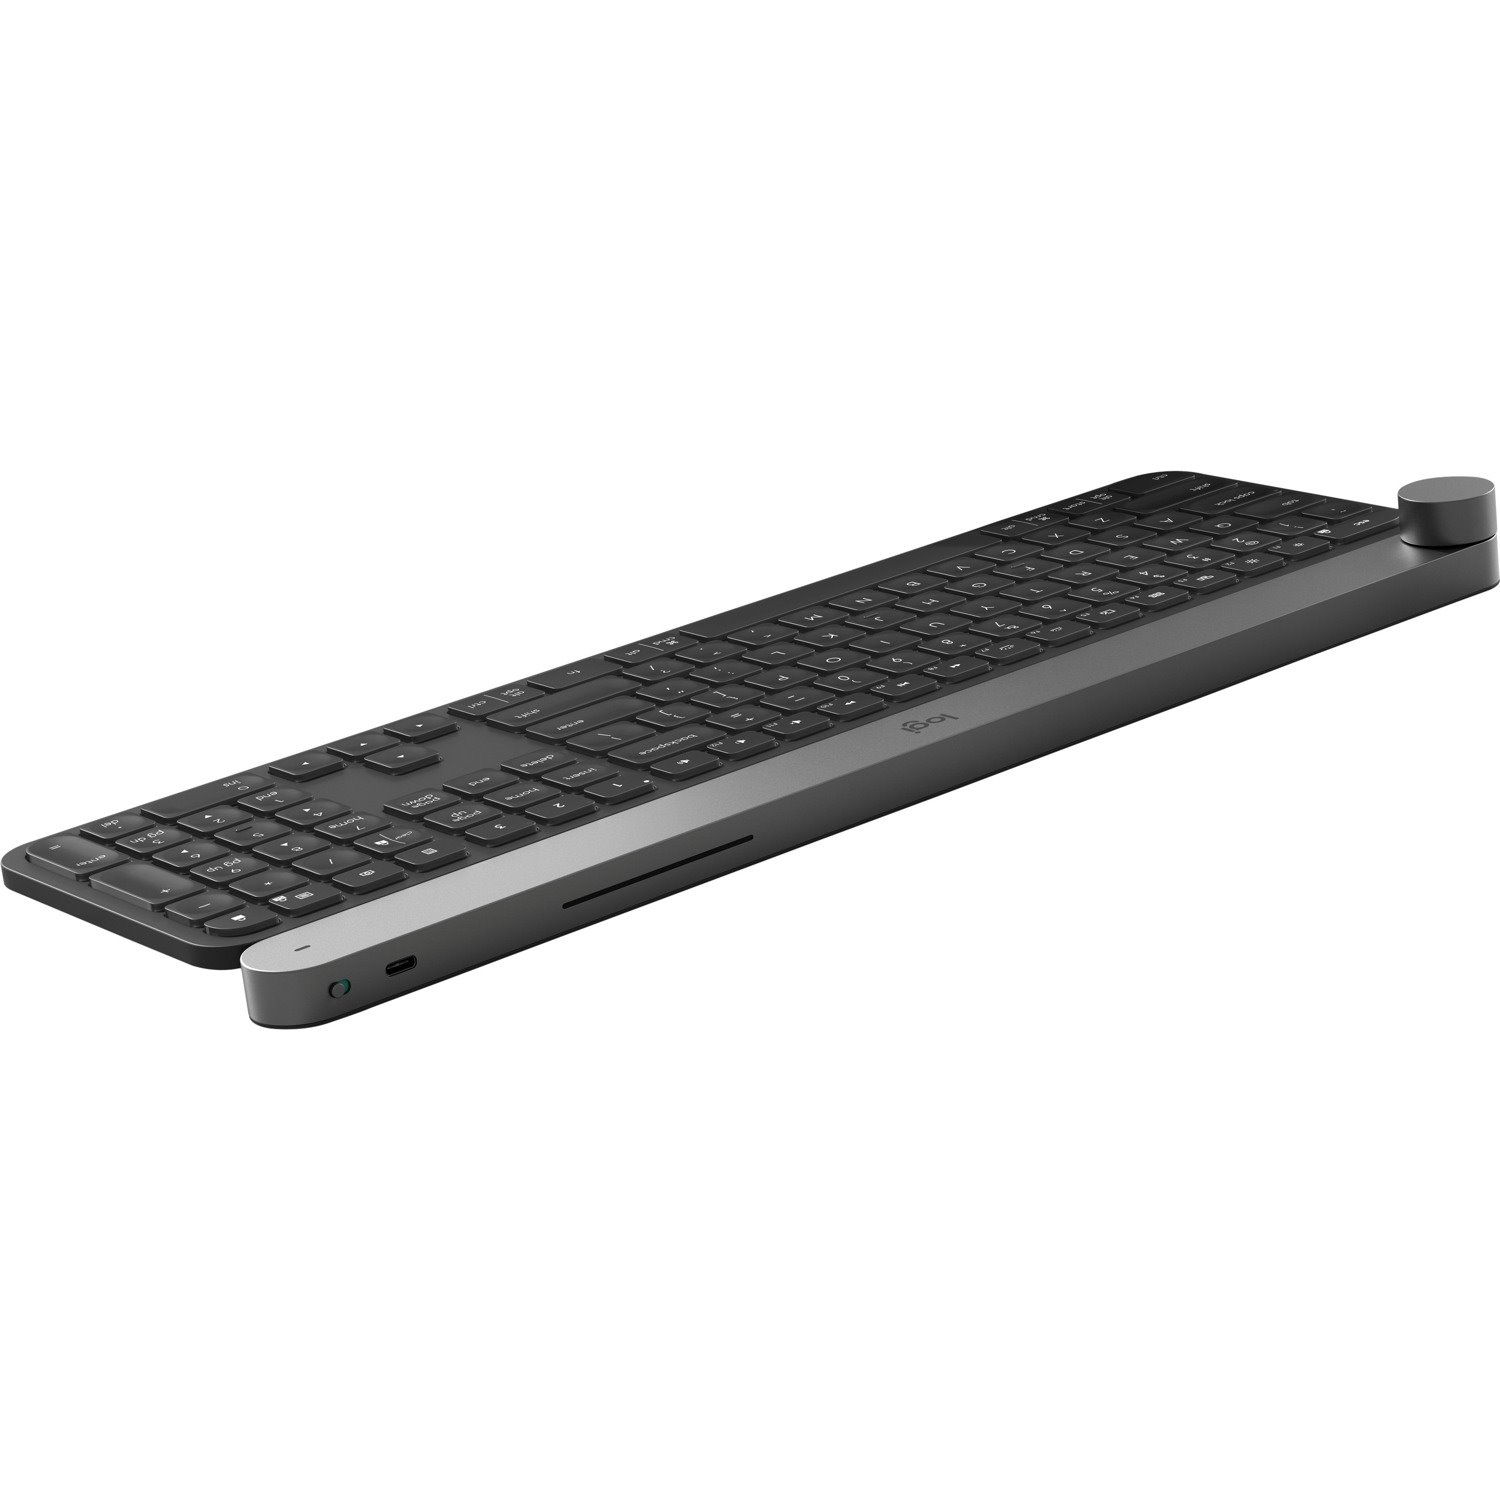 Buy Logitech Craft Keyboard - Wireless Connectivity - Usb Interface 